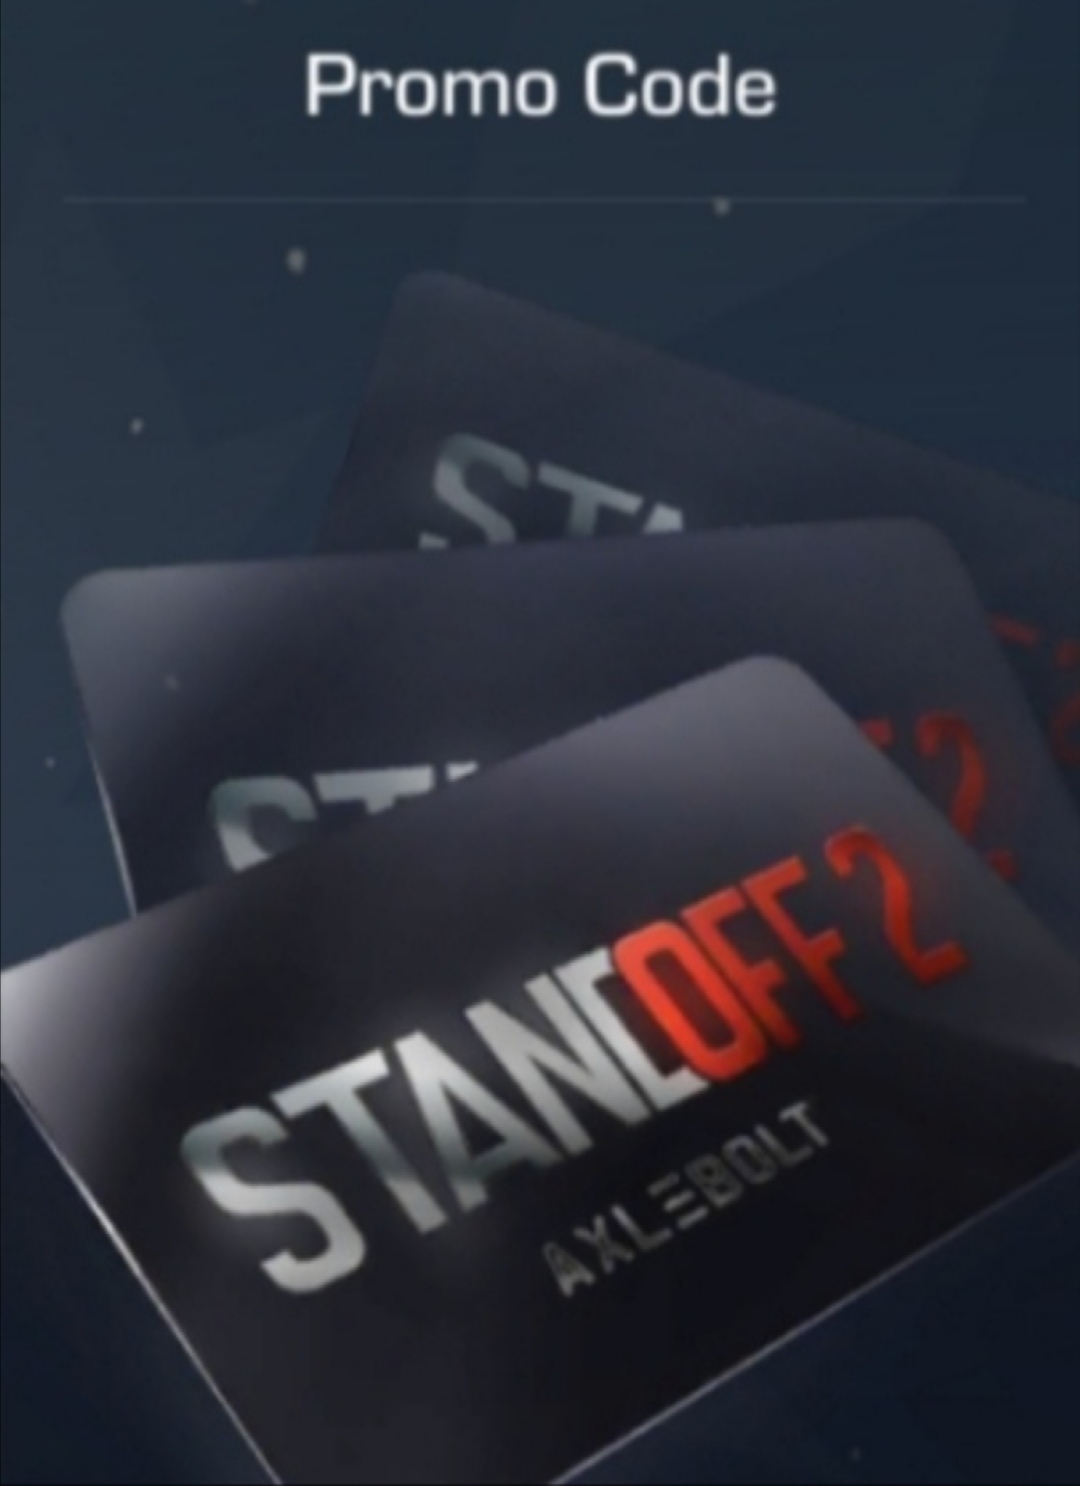 Standoff 2 Promo Codes